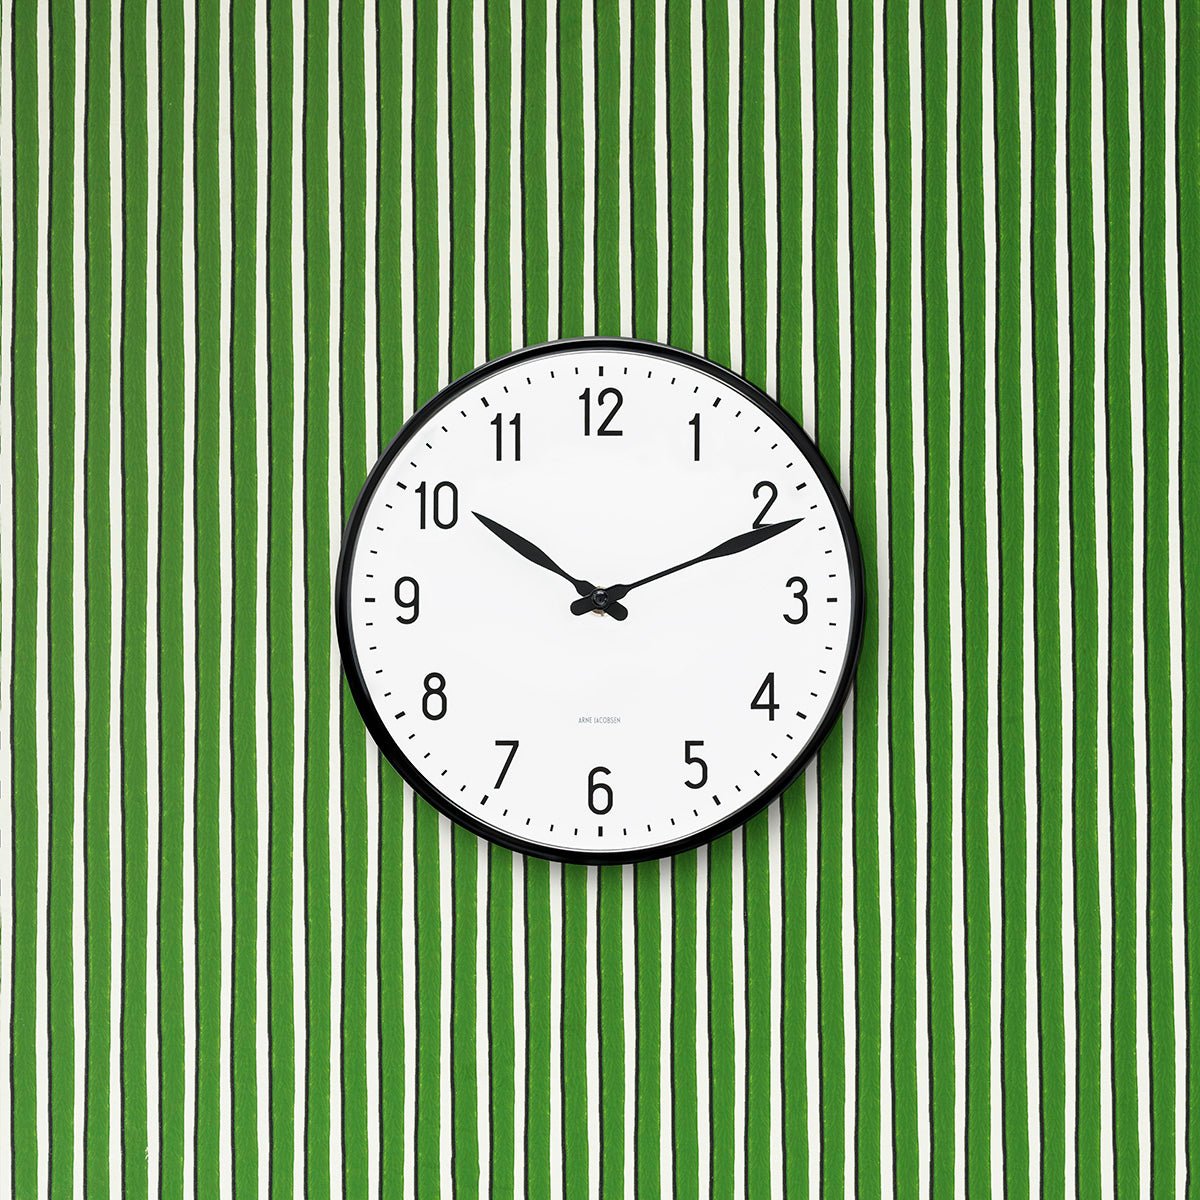 Arne Jacobsen Station Clock 1941 | Panik Design